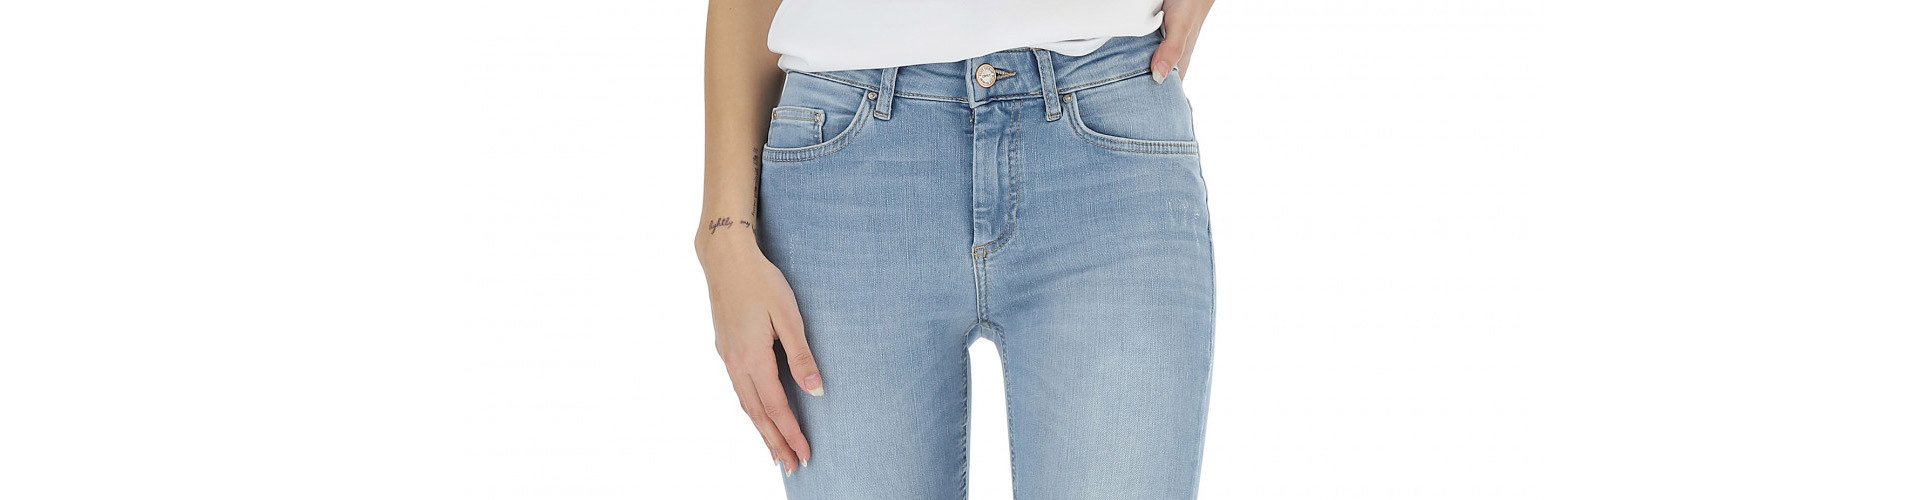 Jeans-skinny-donna.jpg